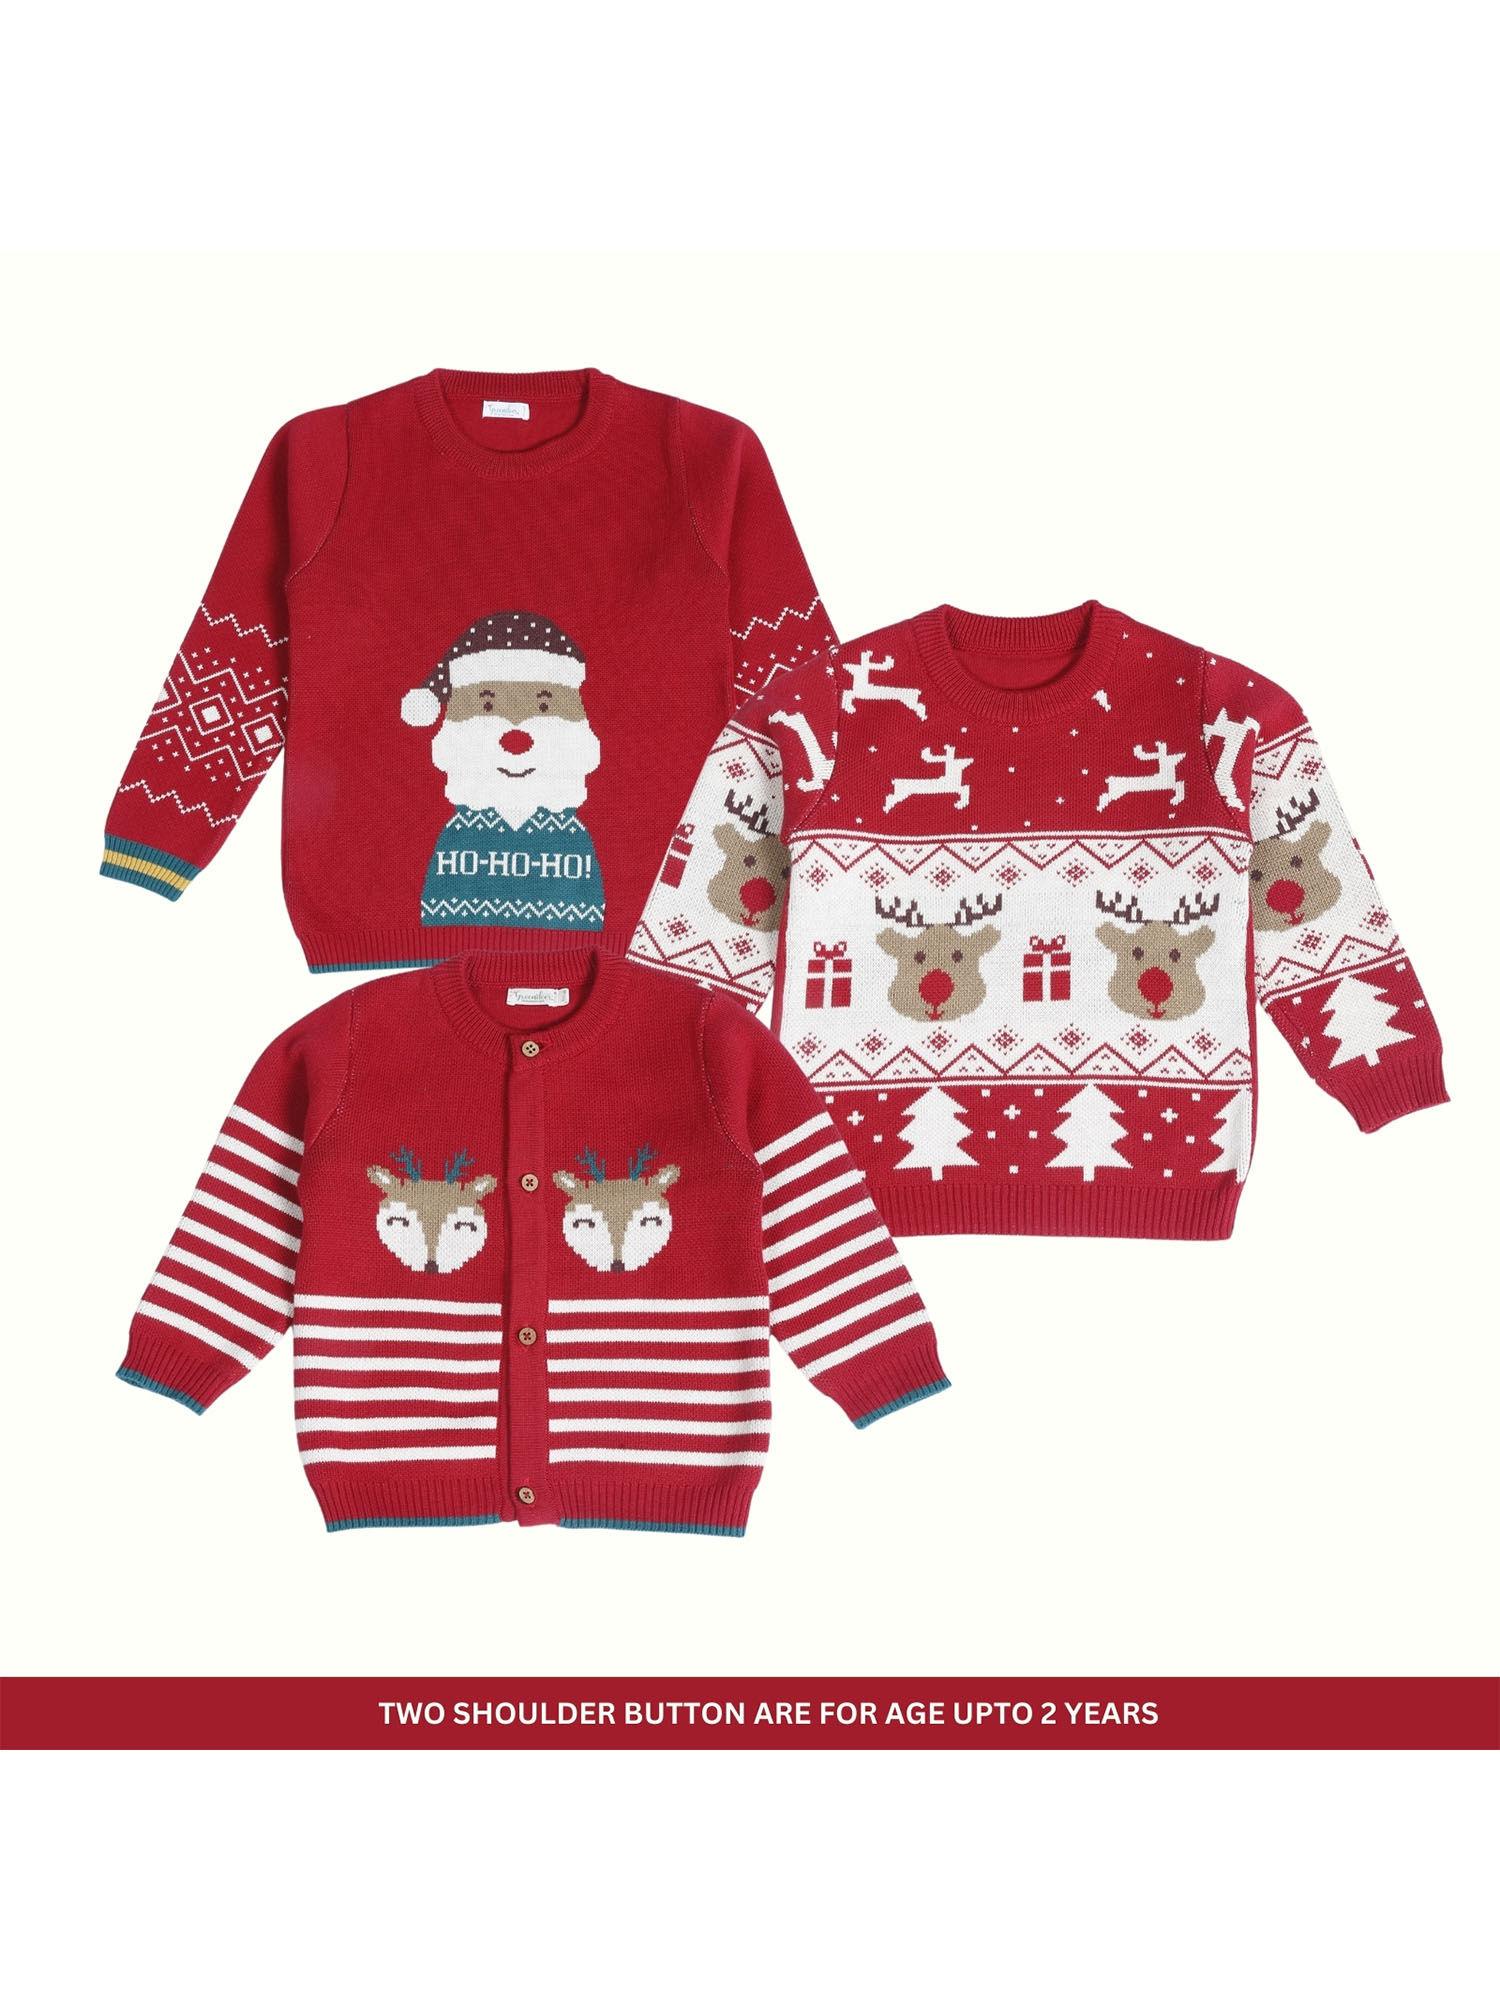 santa jaunty or joyful reindeer 3 sweaters (set of 3)